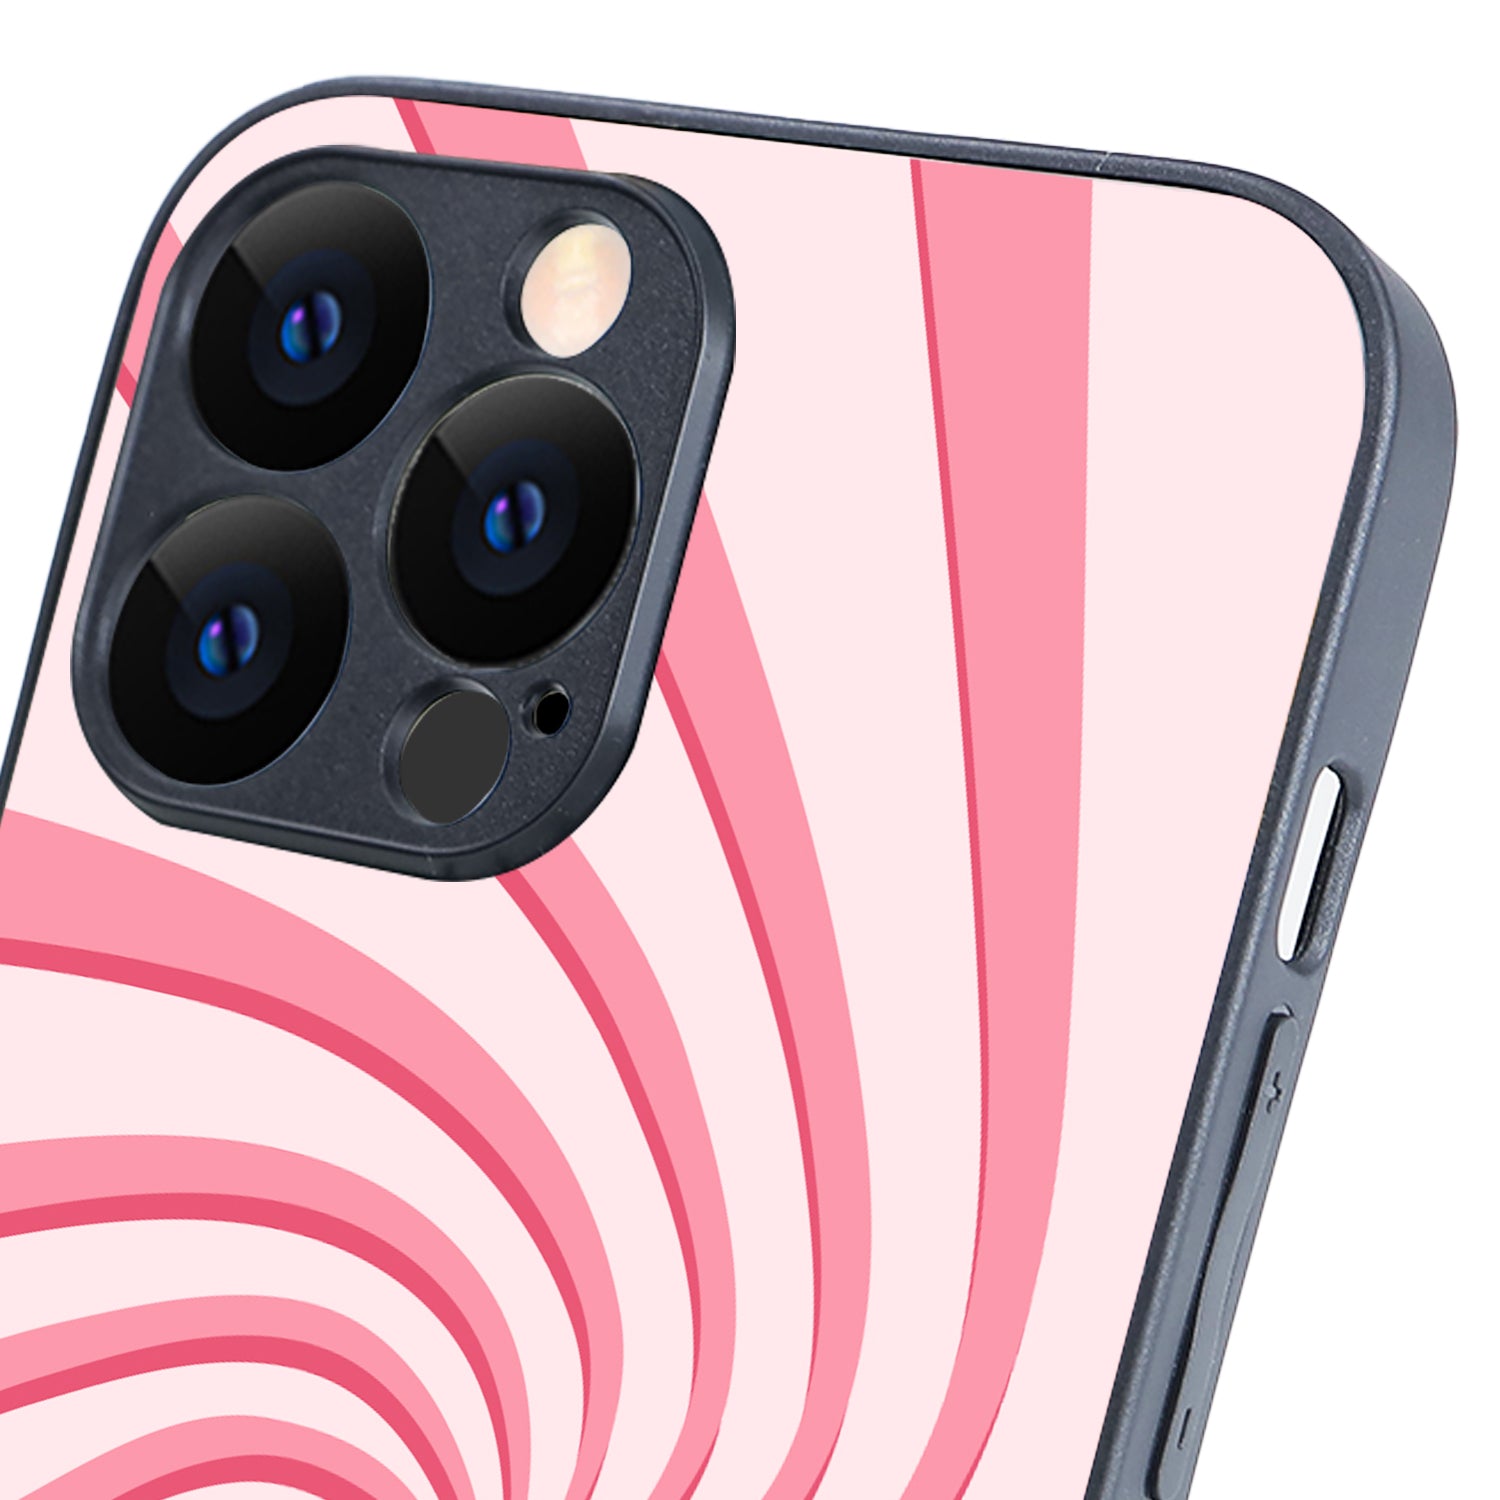 Spiral Optical Illusion iPhone 13 Pro Max Case